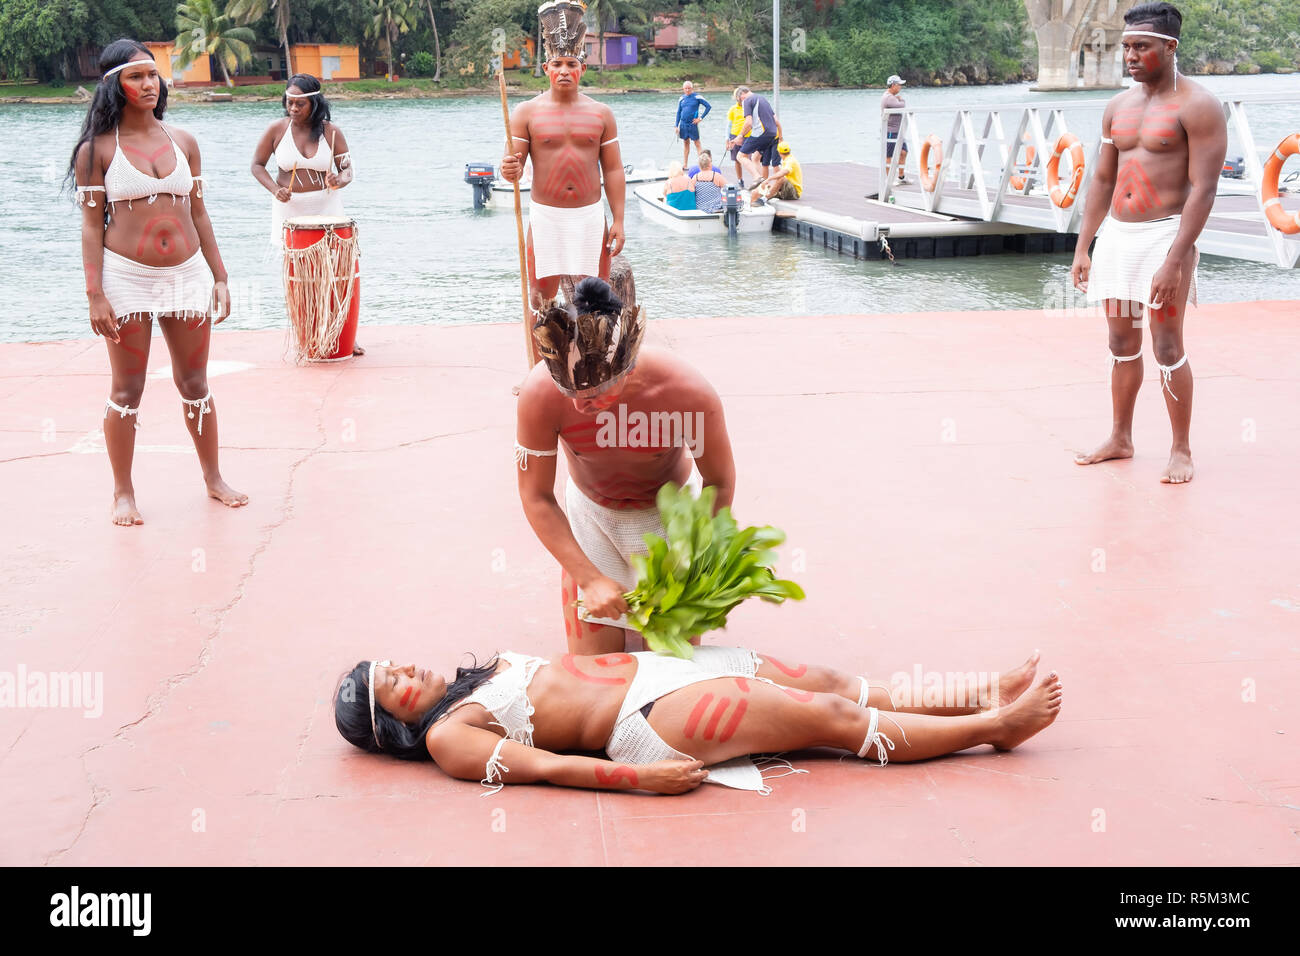 Cuban indigenous people perform a skit depicting a healing ritual for tourists near Matanzas Cuba. Stock Photo